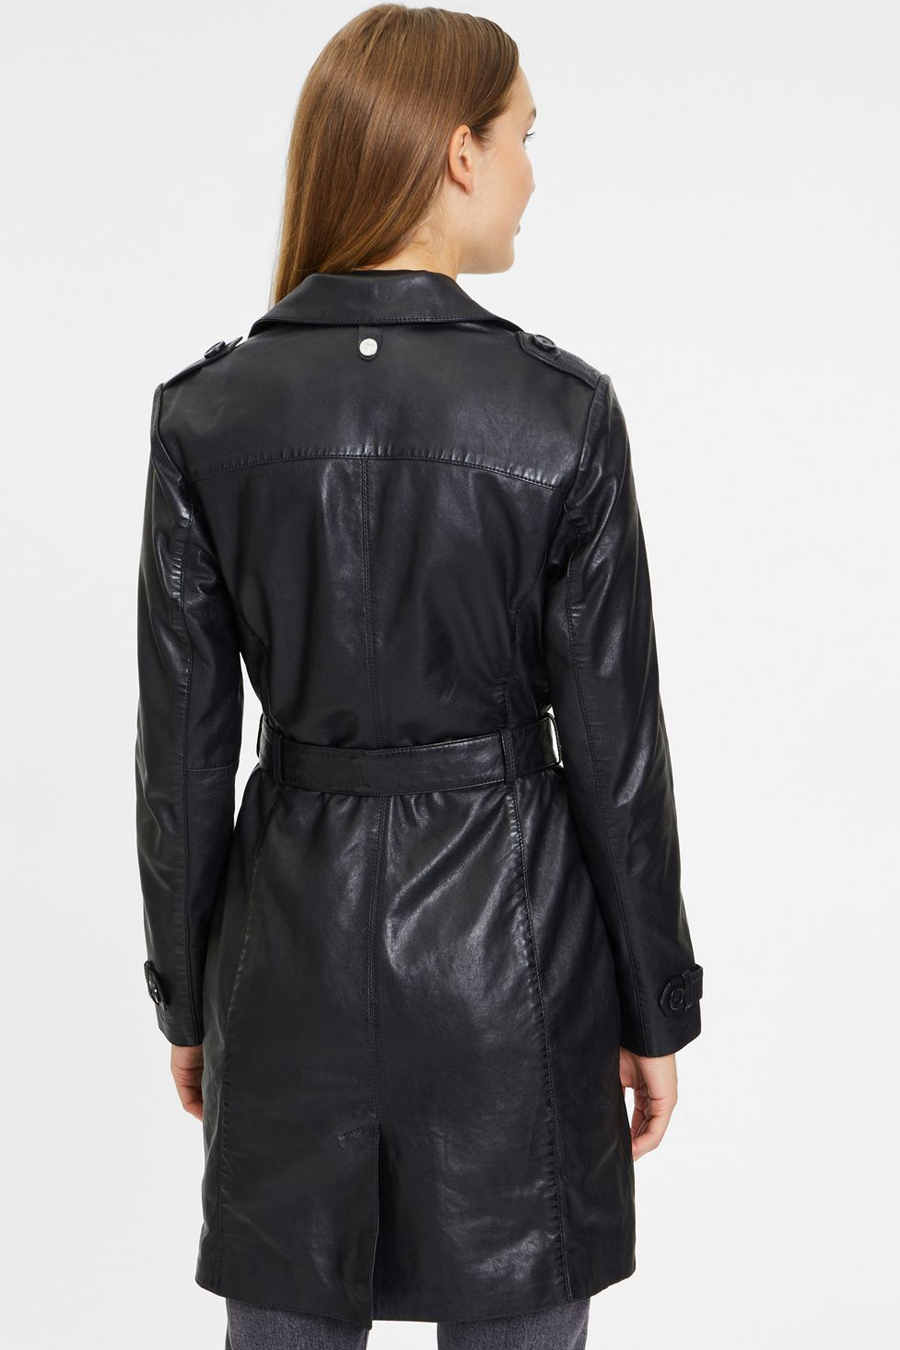 Кожаная куртка GIPSY 1102-0001-black